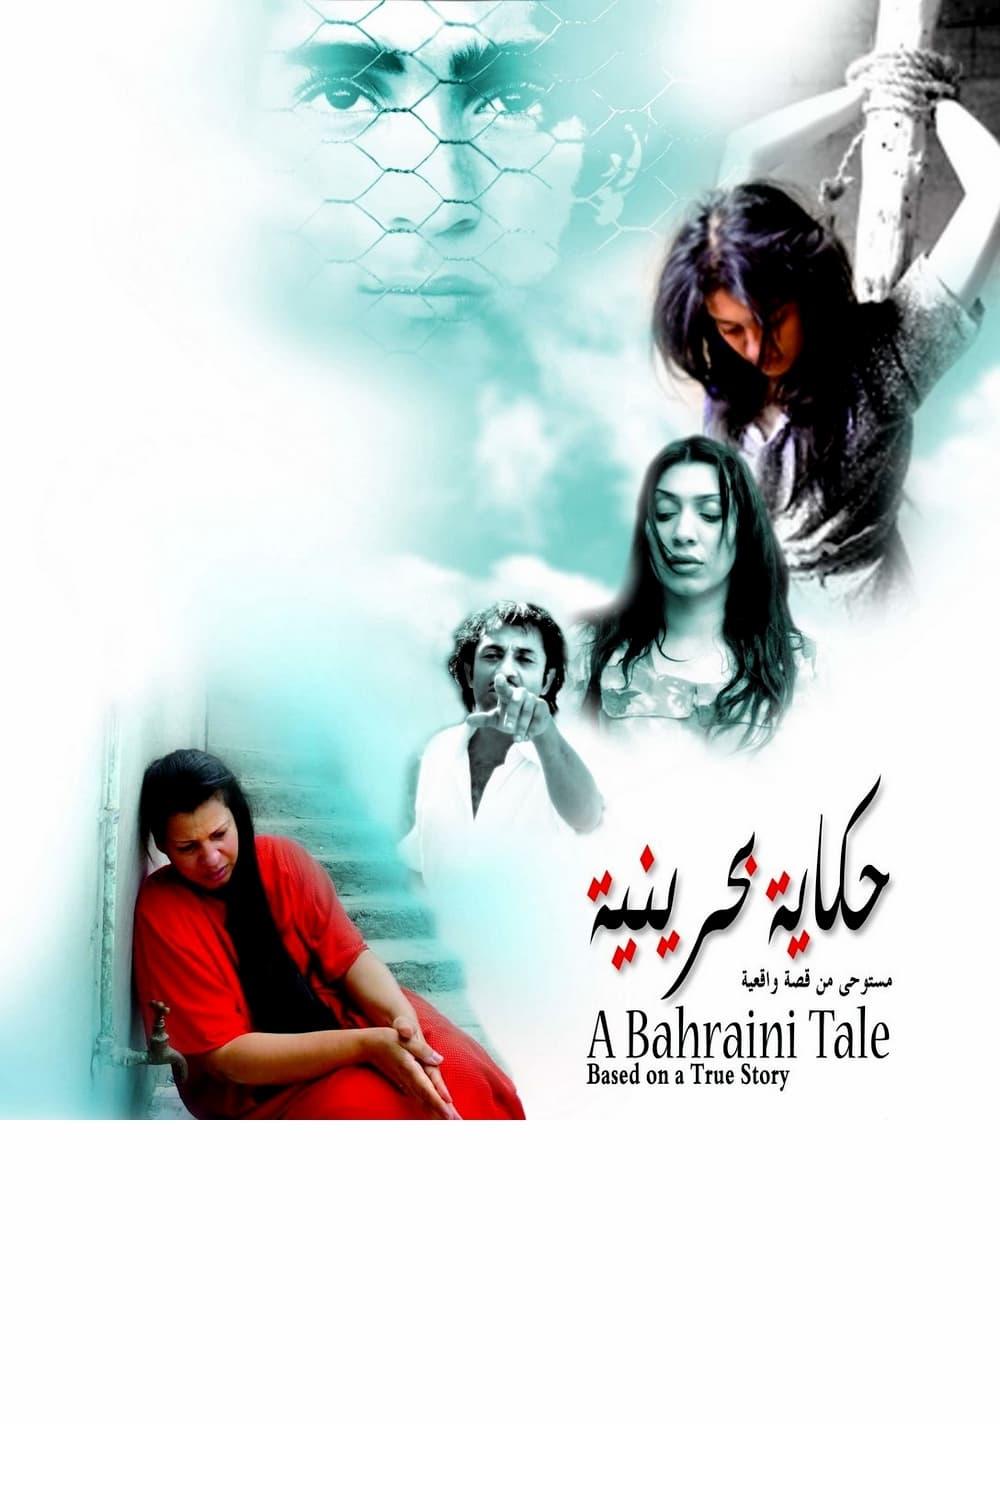 A Bahraini Tale poster